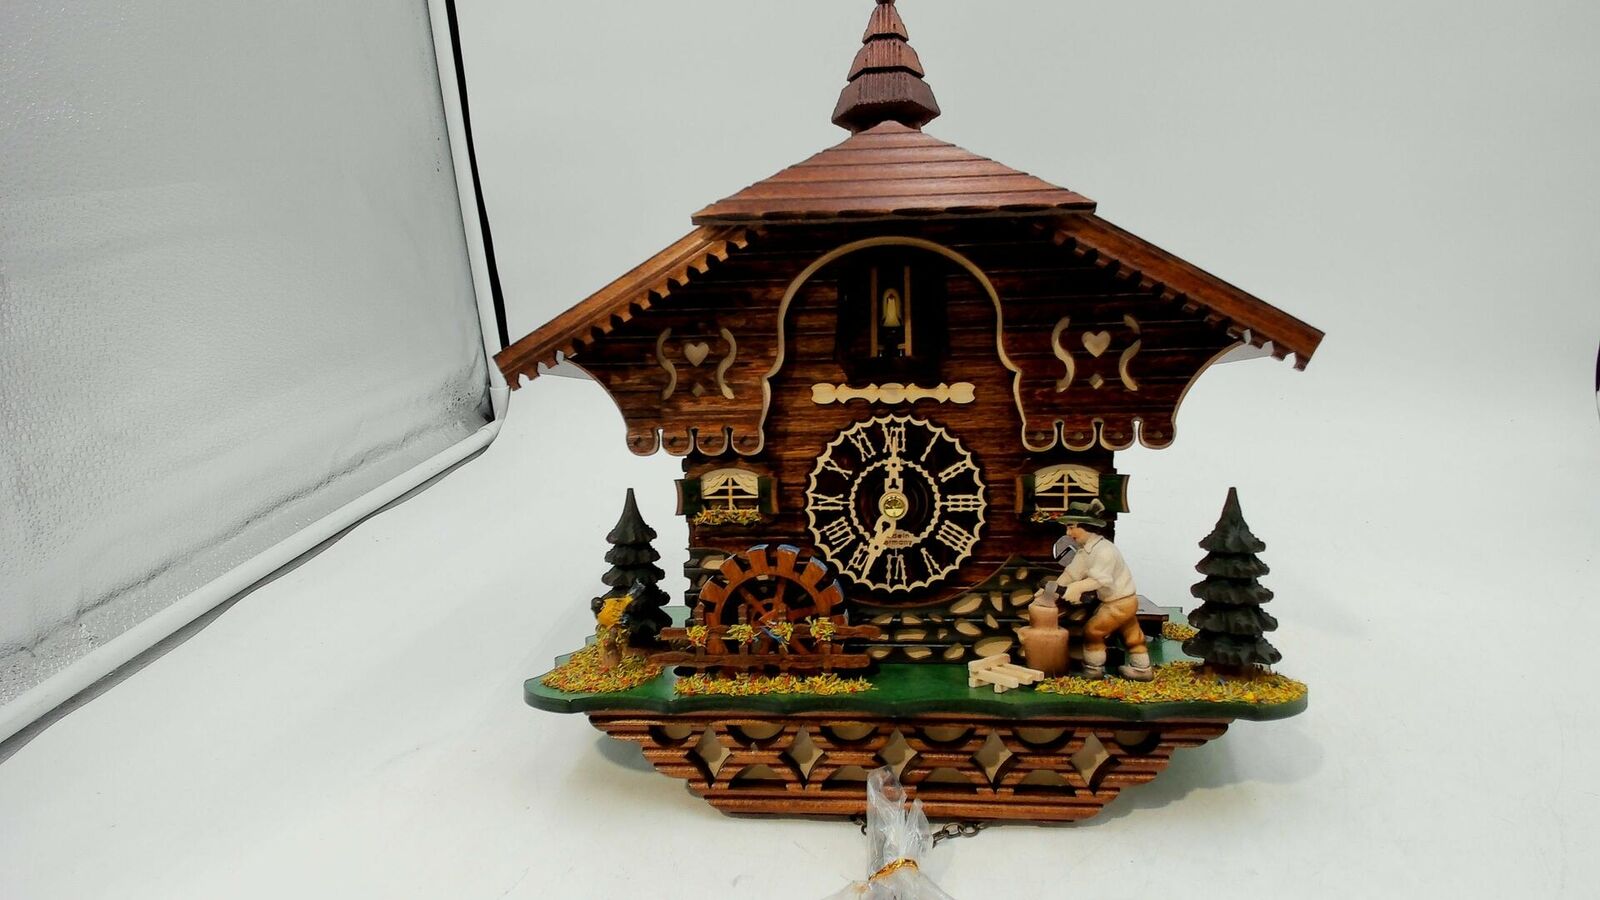 Cuckoo-Palace German Cuckoo Clock - The Brotzeit House